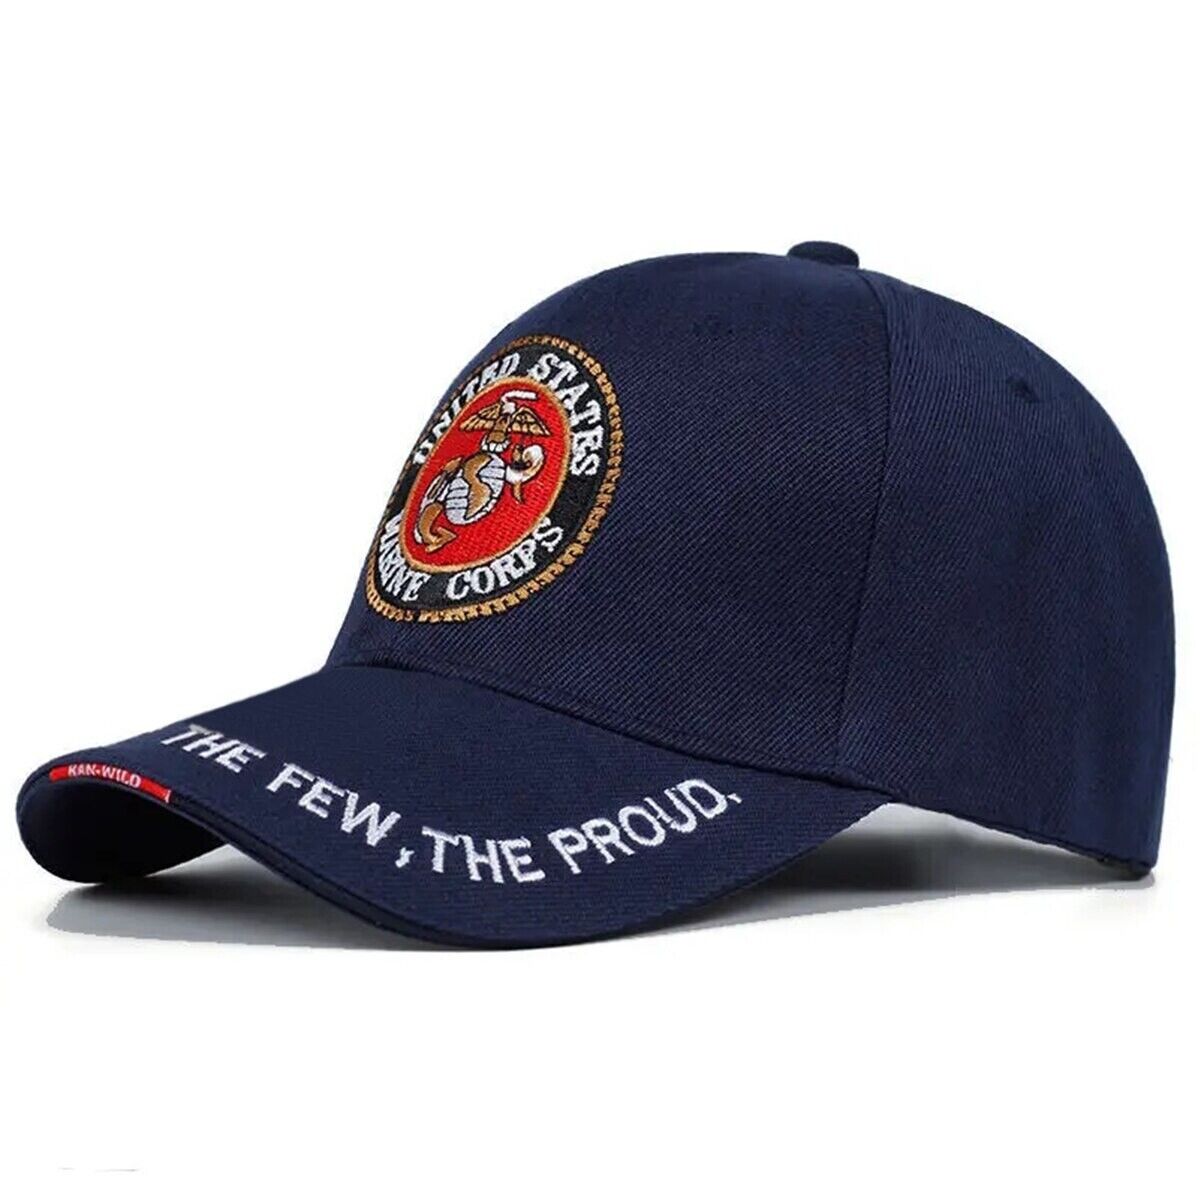 U.S. MARINE CORPS "THE FEW, THE PROUD" BASEBALL CAP.